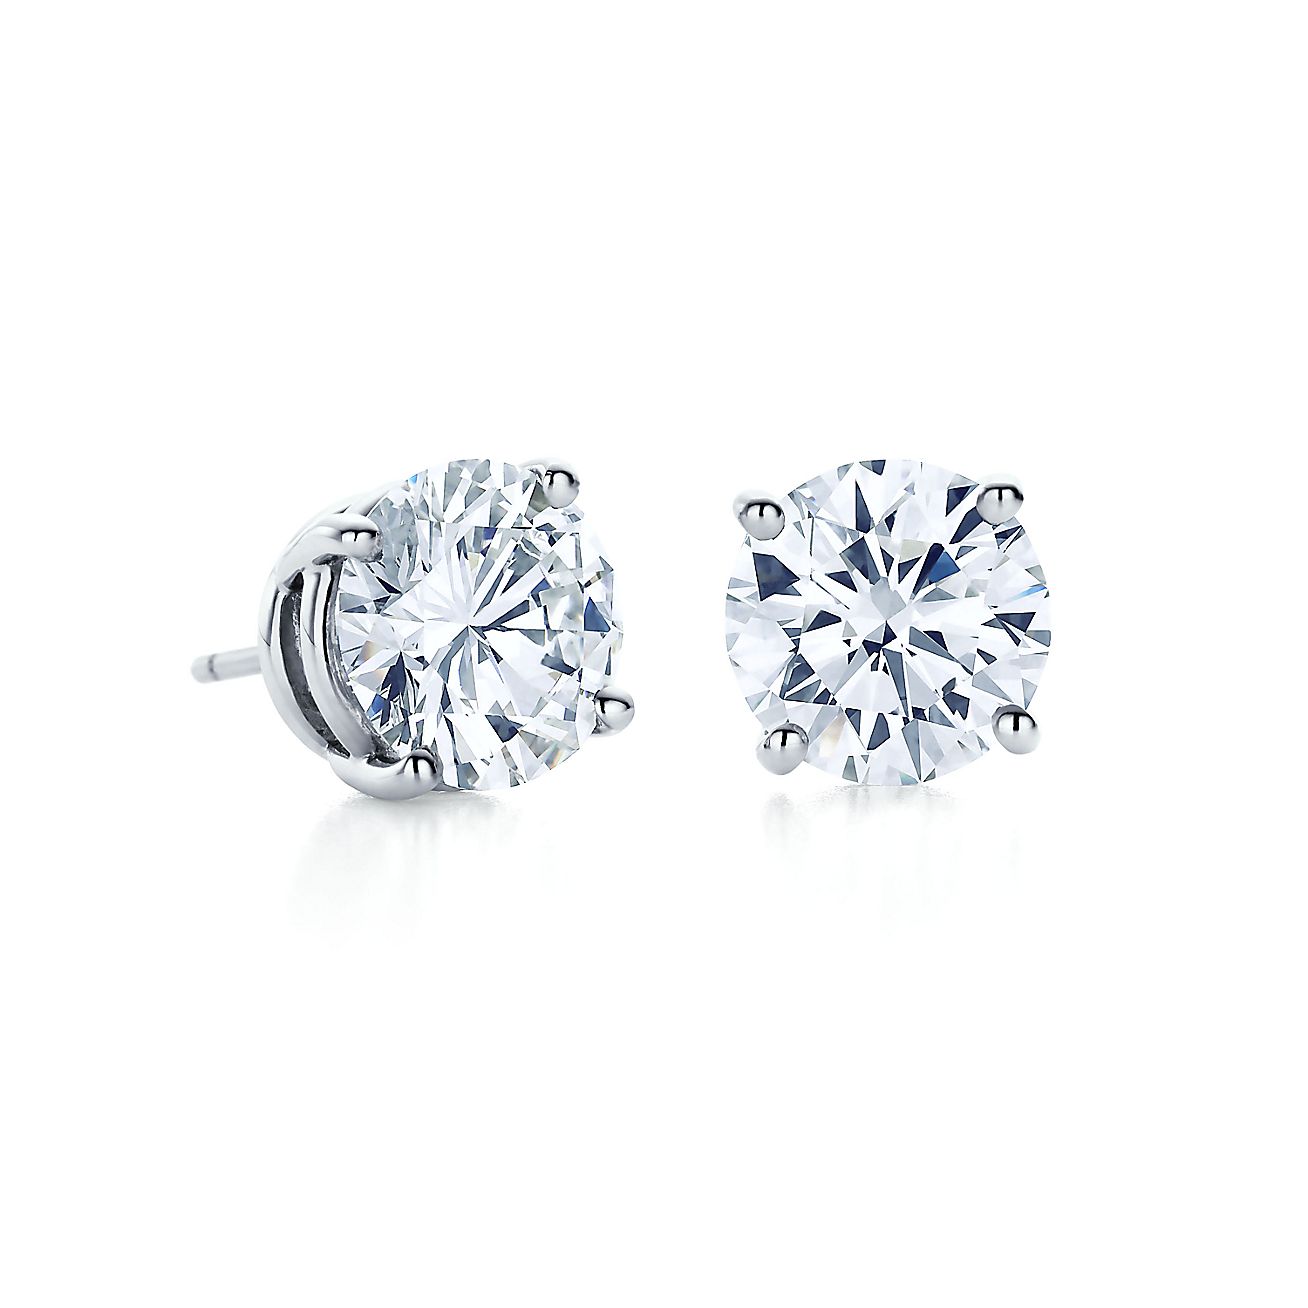 Round brilliant Tiffany diamond earrings in platinum. | Tiffany & Co.